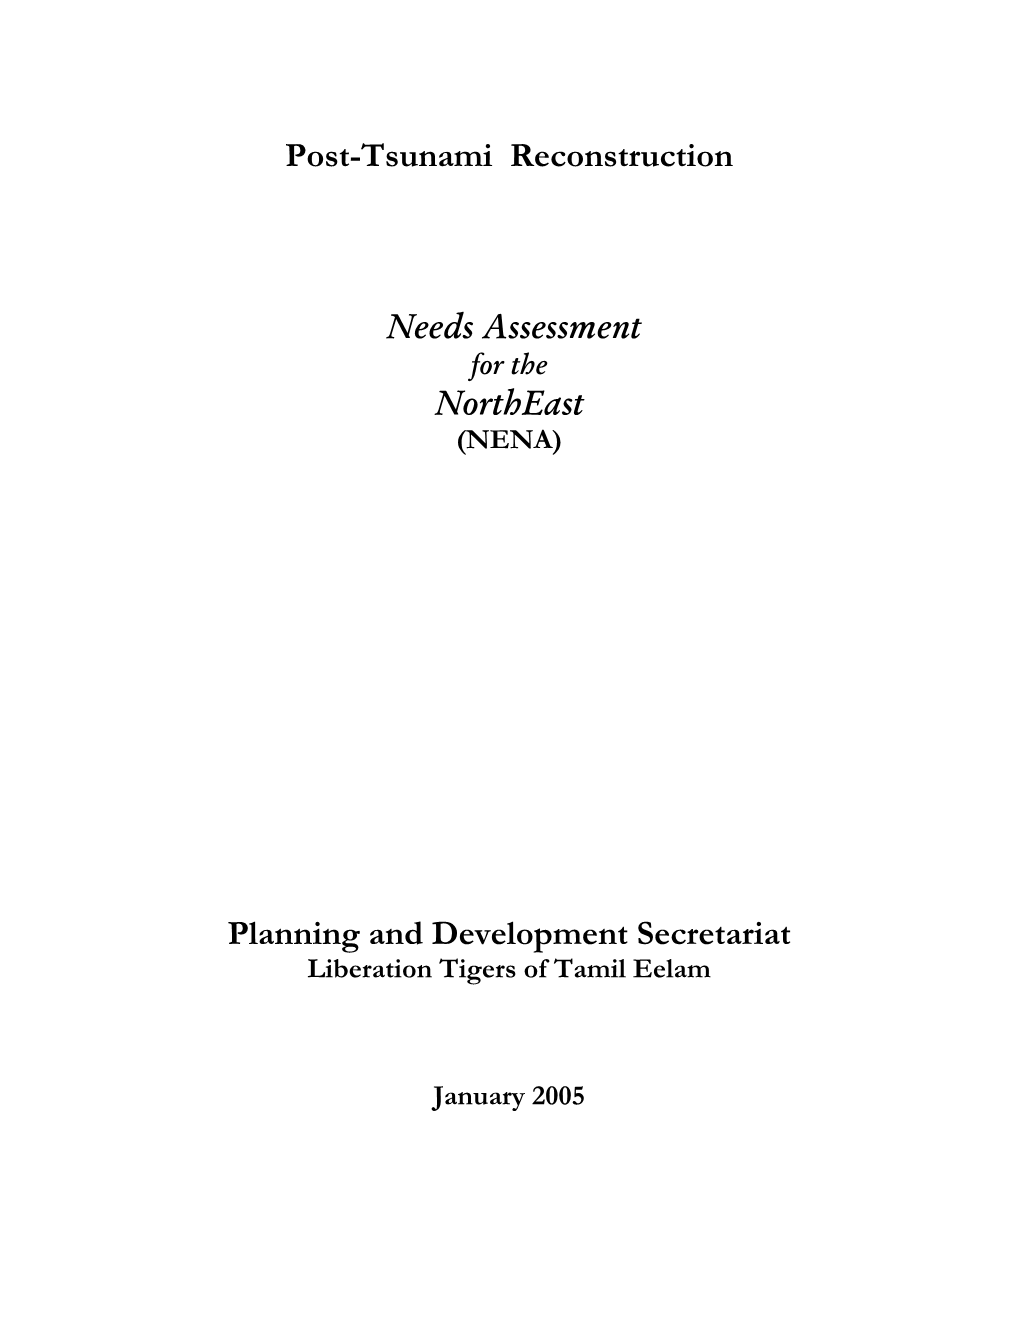 Post-Tsunami Reconstruction Needs Assessment Northeast Planning and Development Secretariat